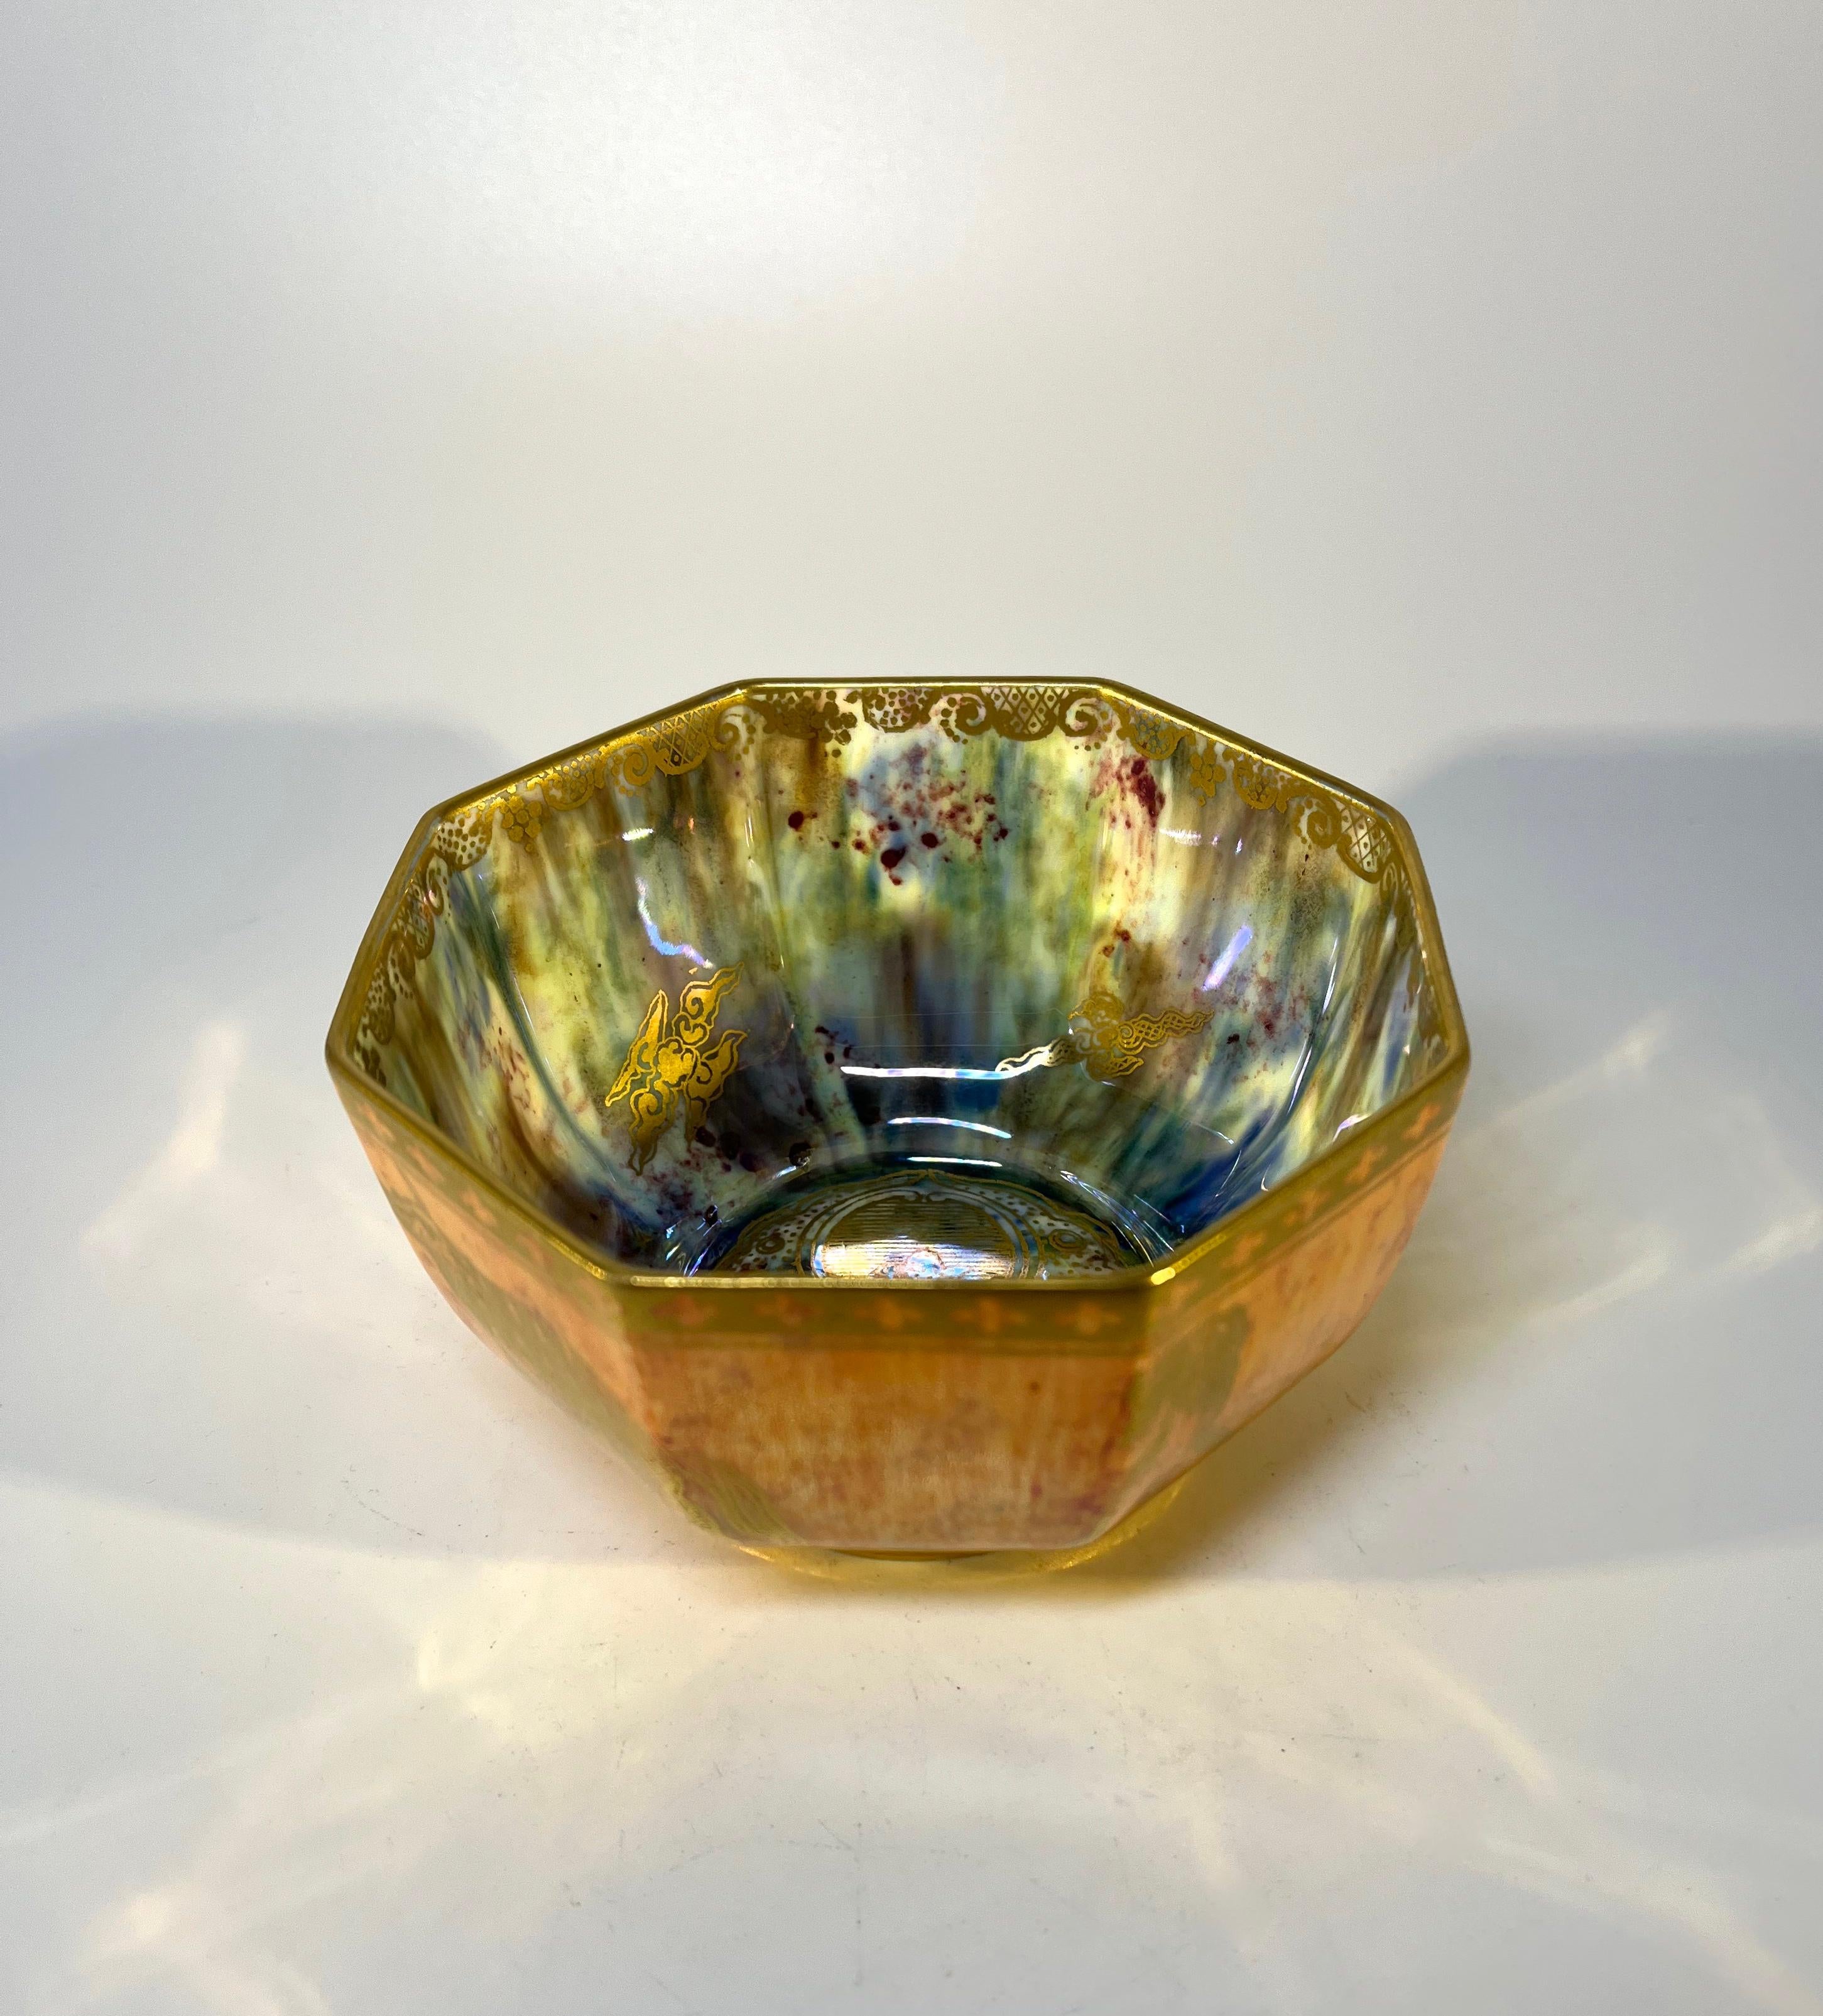 Glazed Mystical Creatures, Golden Wedgwood Lustre Bowl By Daisy Makeig-Jones, c 1925